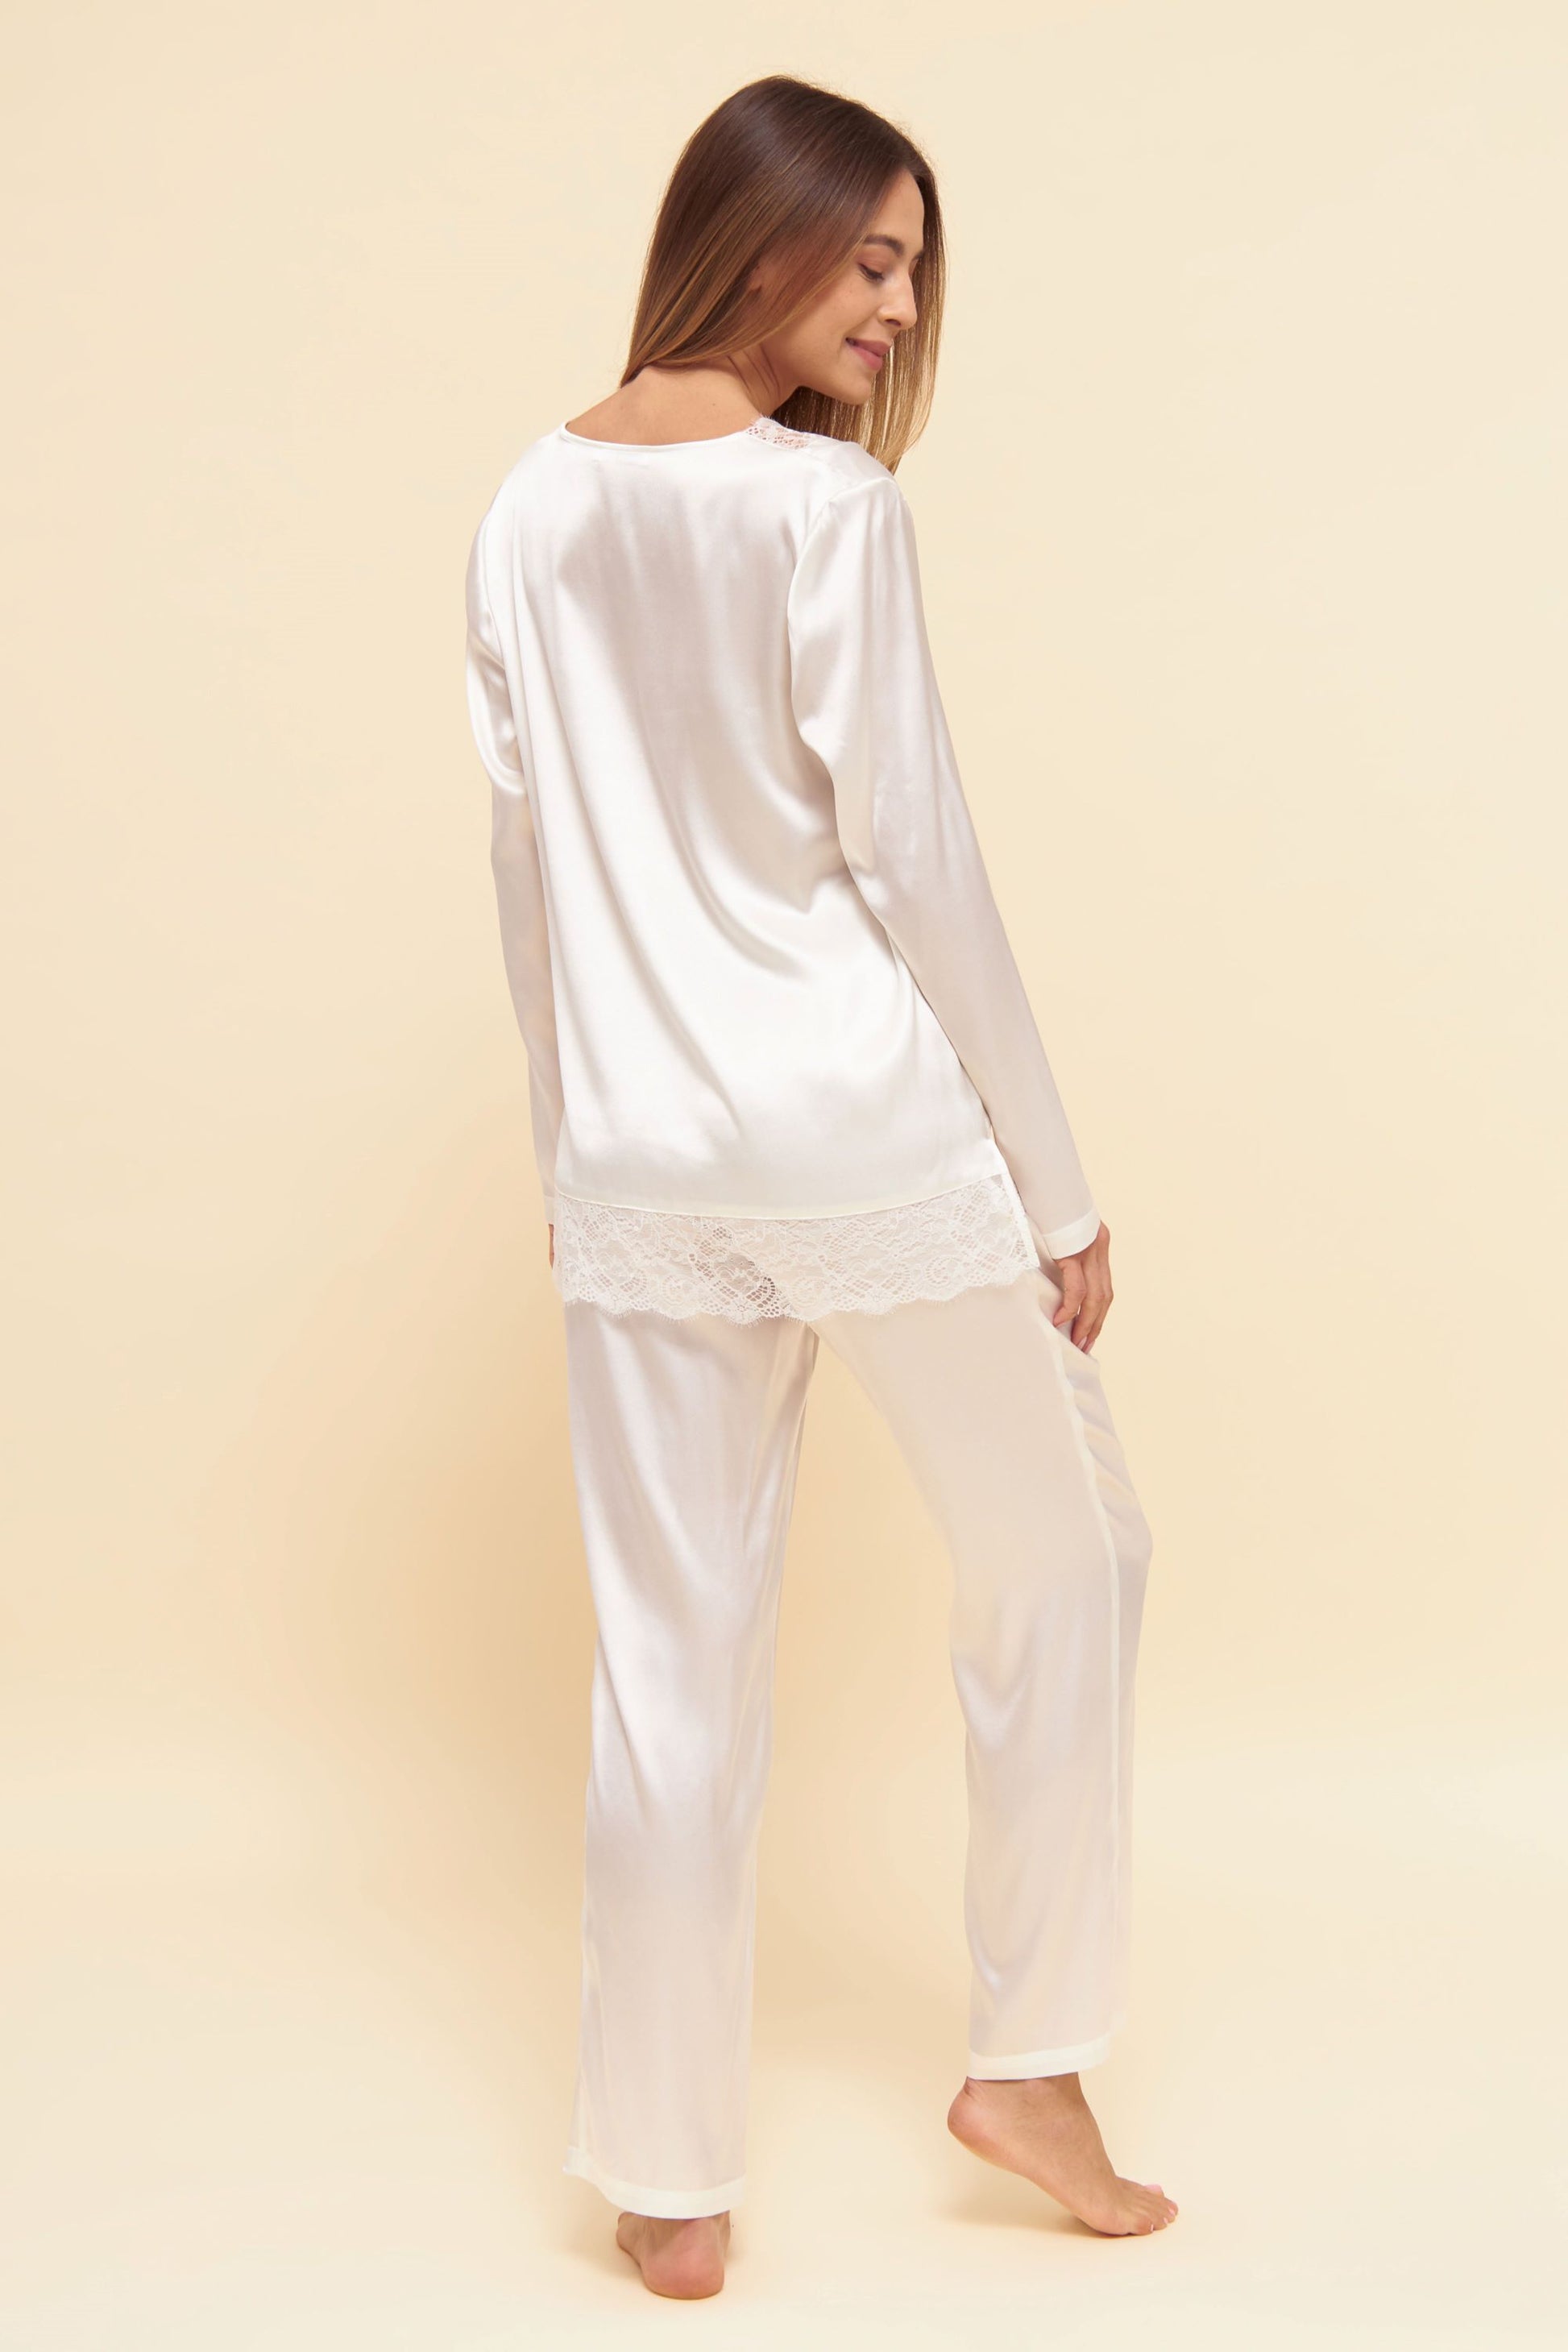  STJDM Nightgown,Spring Satin Pajama Women Summer Solid White  Elegant Pyjama Set Sleepwear Nightwear XL Beige : Clothing, Shoes & Jewelry